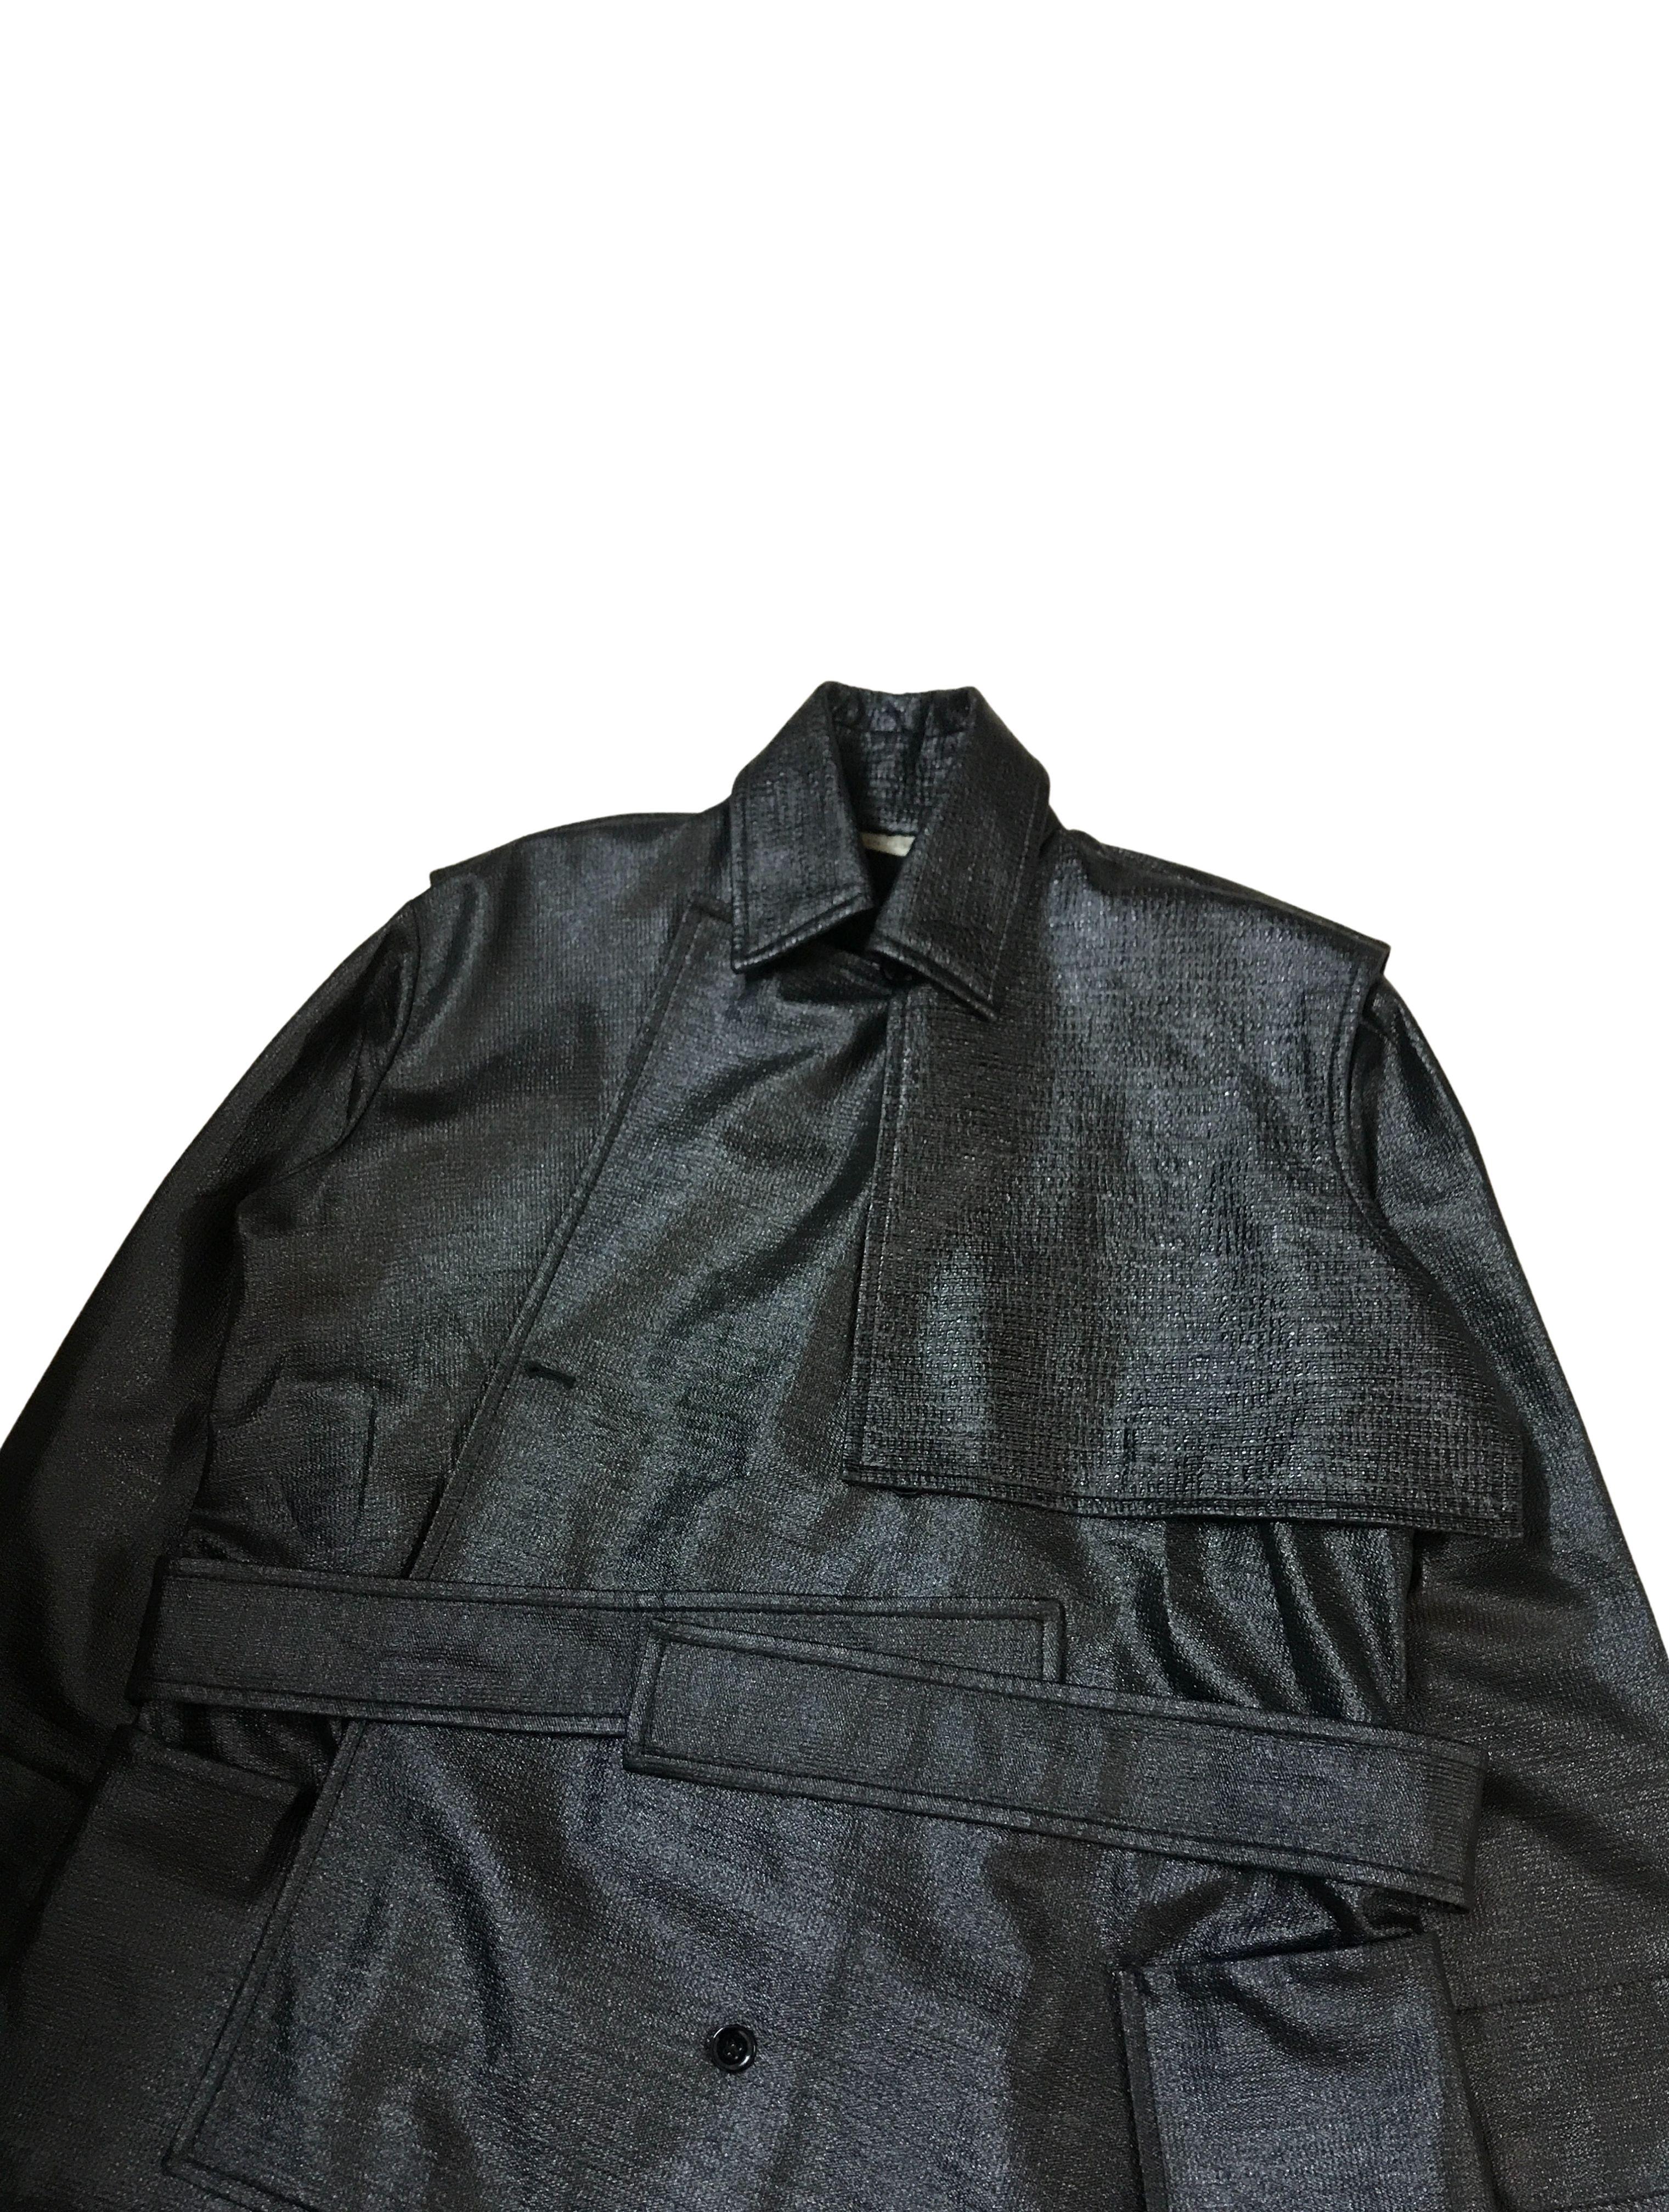 Black Balenciaga Deconstructed Origami Belted Coat, 2010's